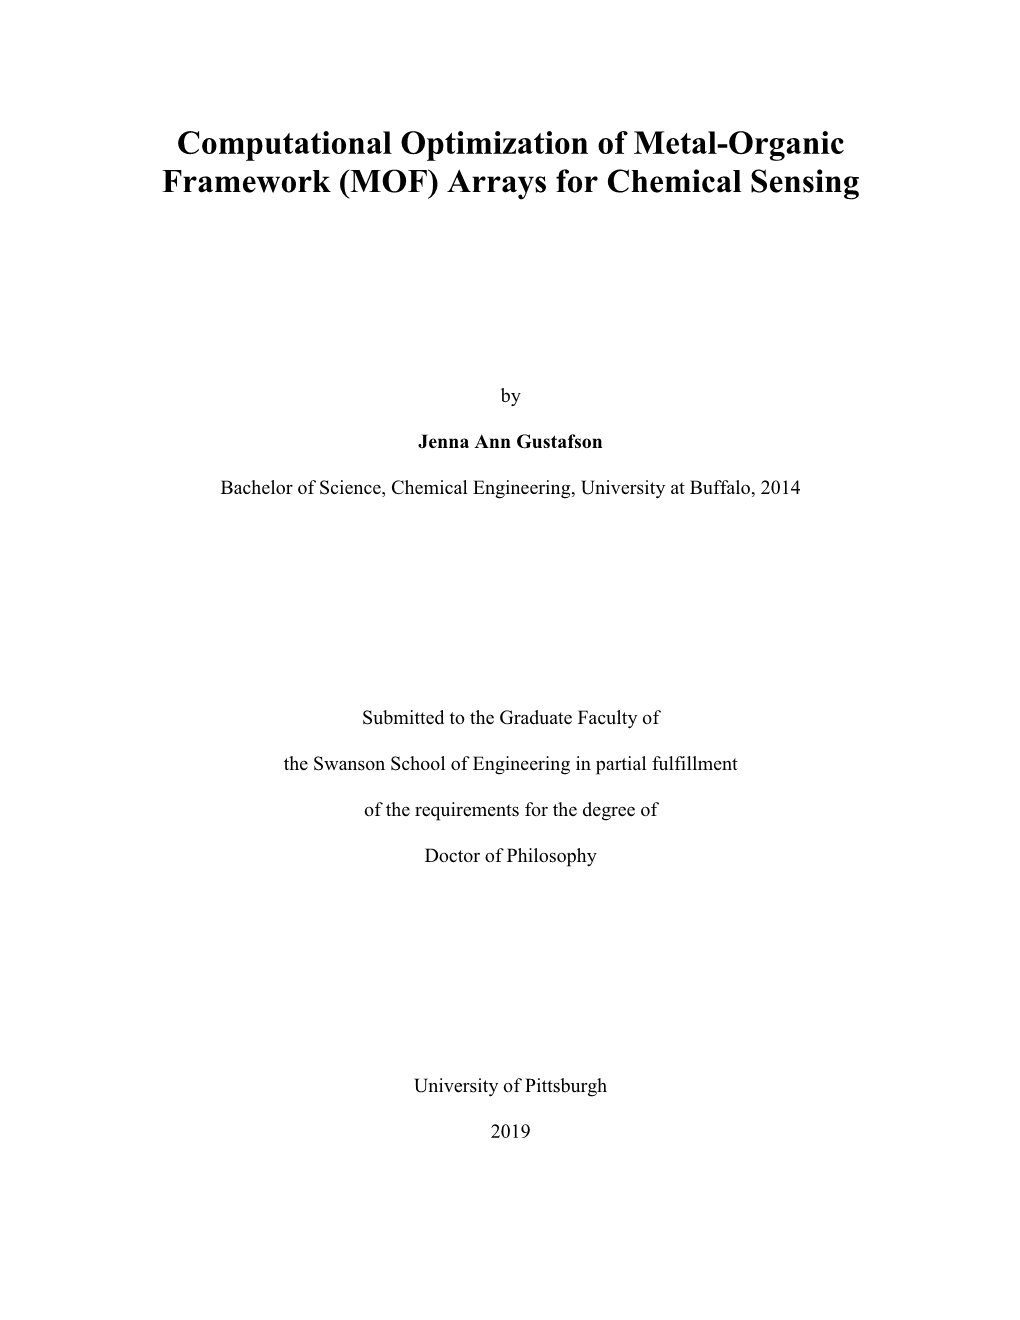 Computational Optimization of Metal-Organic Framework (MOF) Arrays for Chemical Sensing